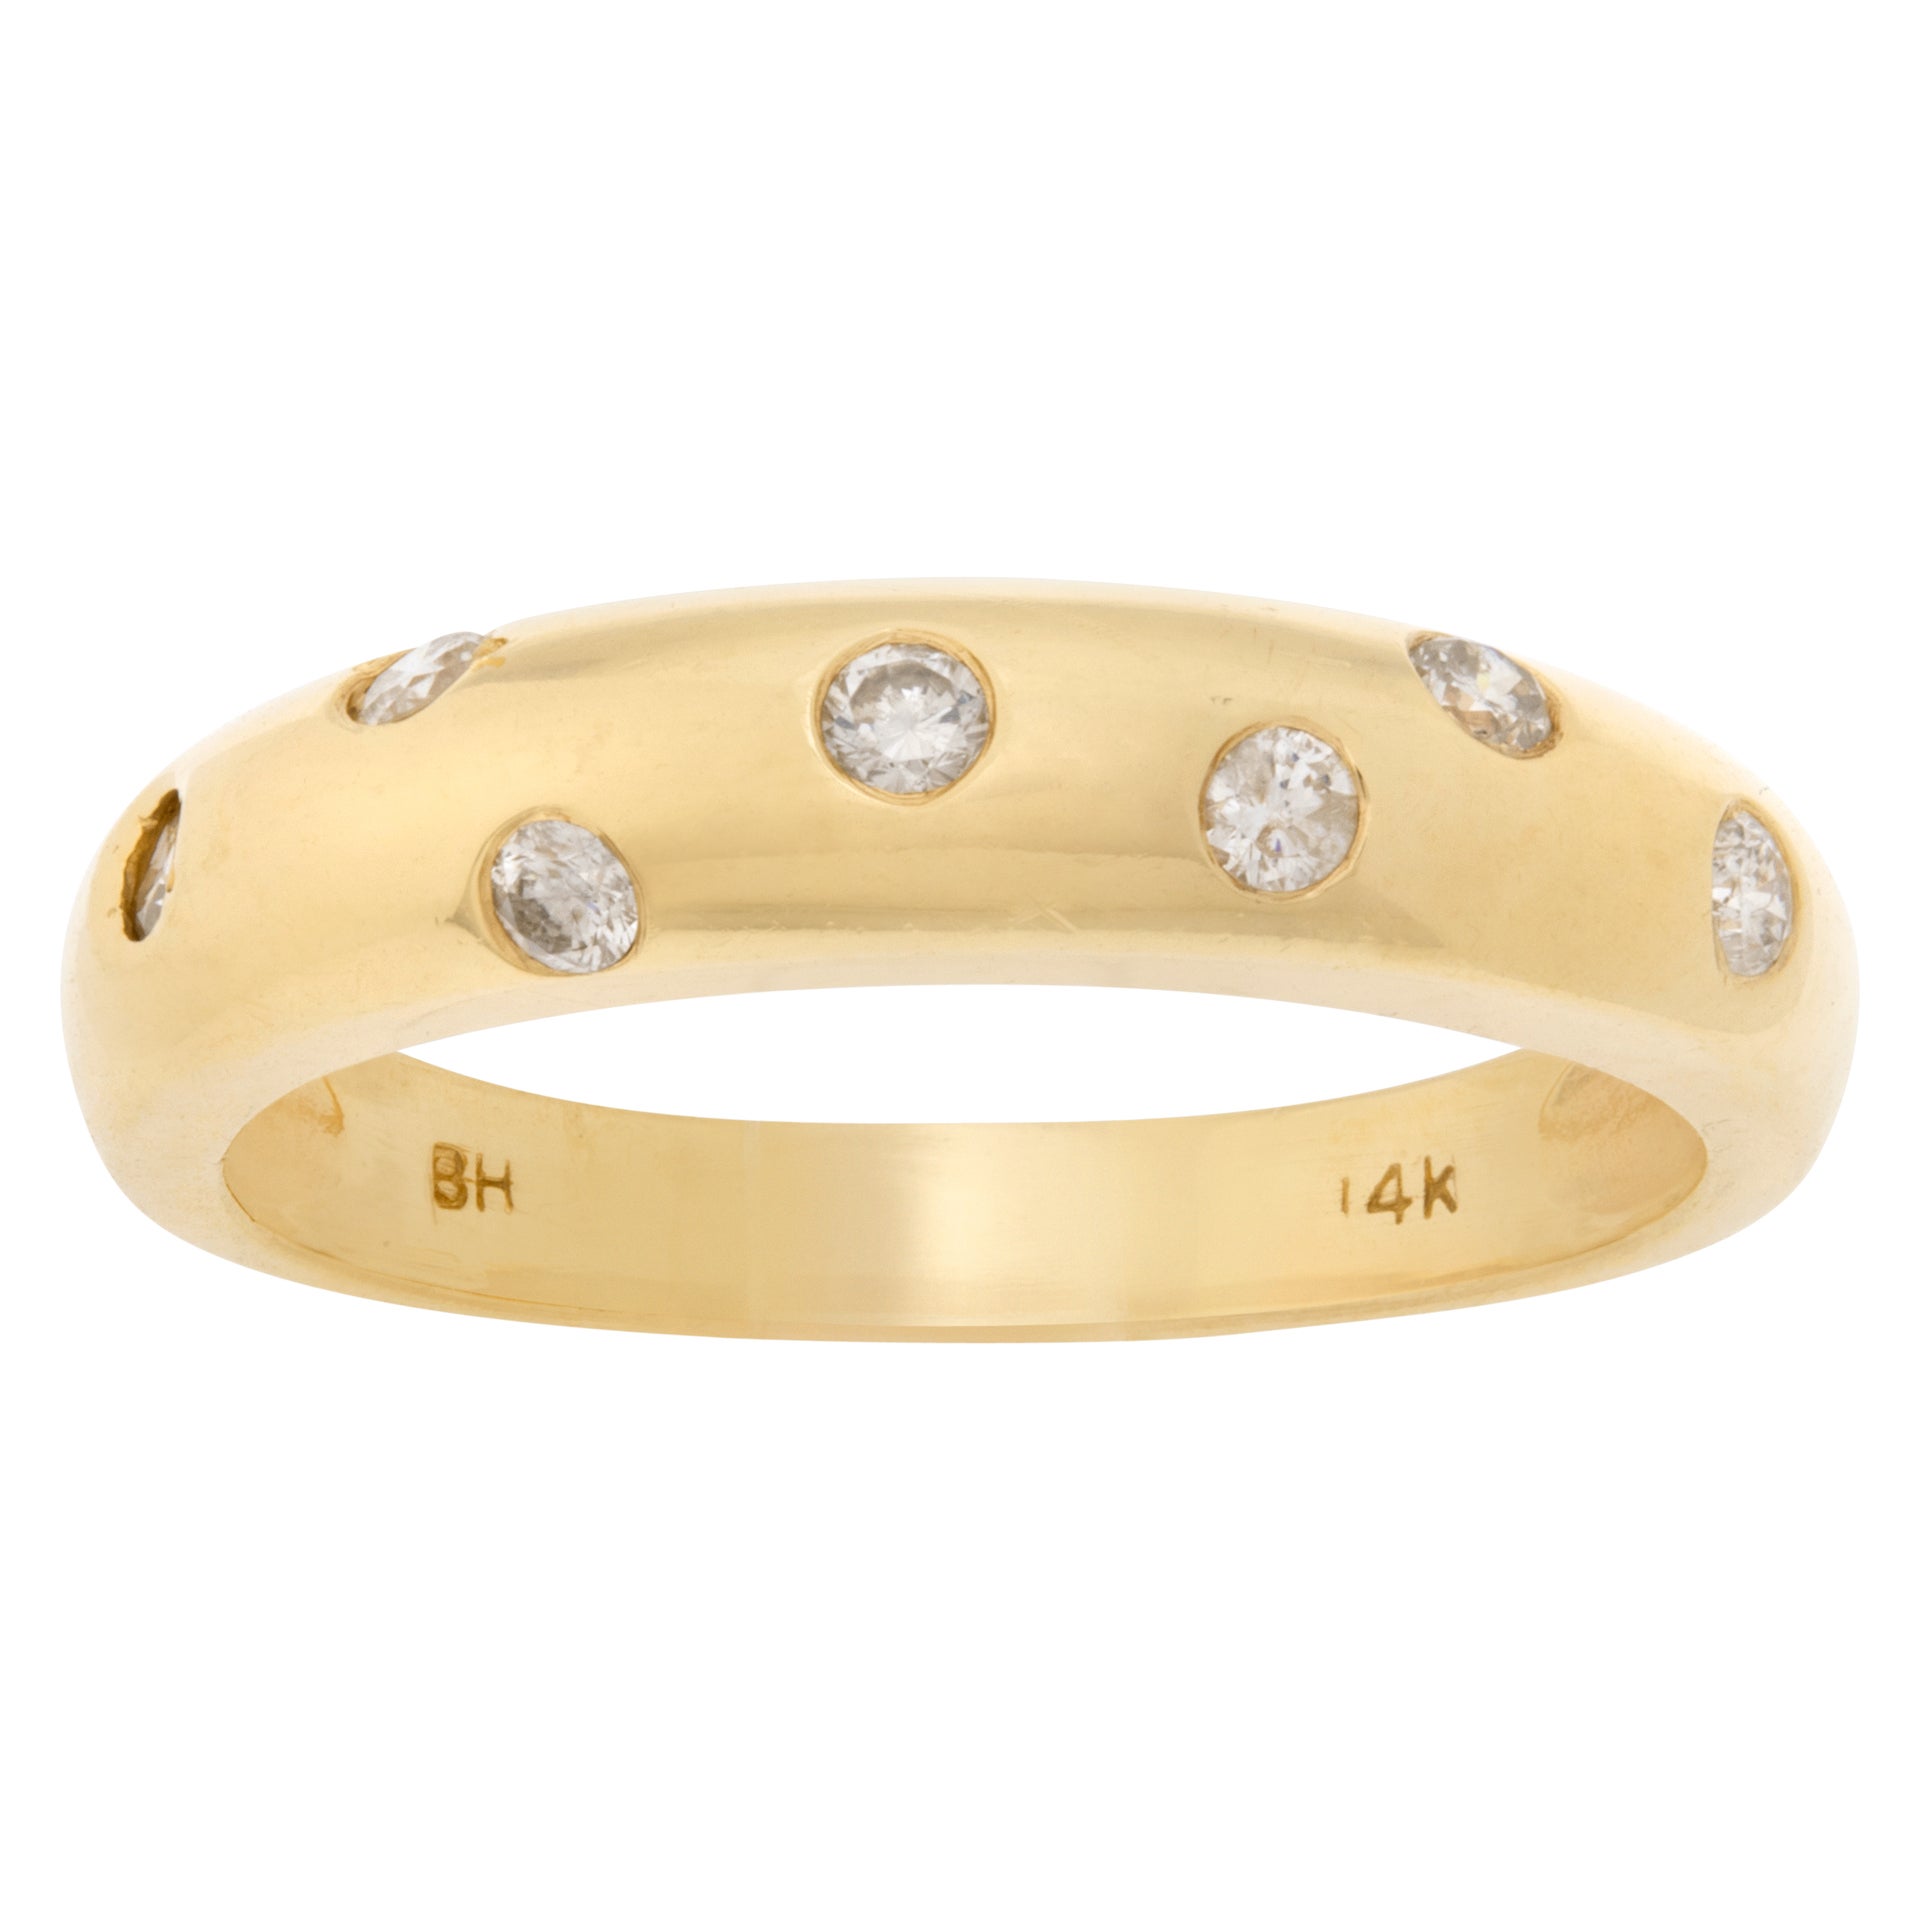 14k Yellow Gold Ring with 0.14 Carat Round Brilliant Diamonds